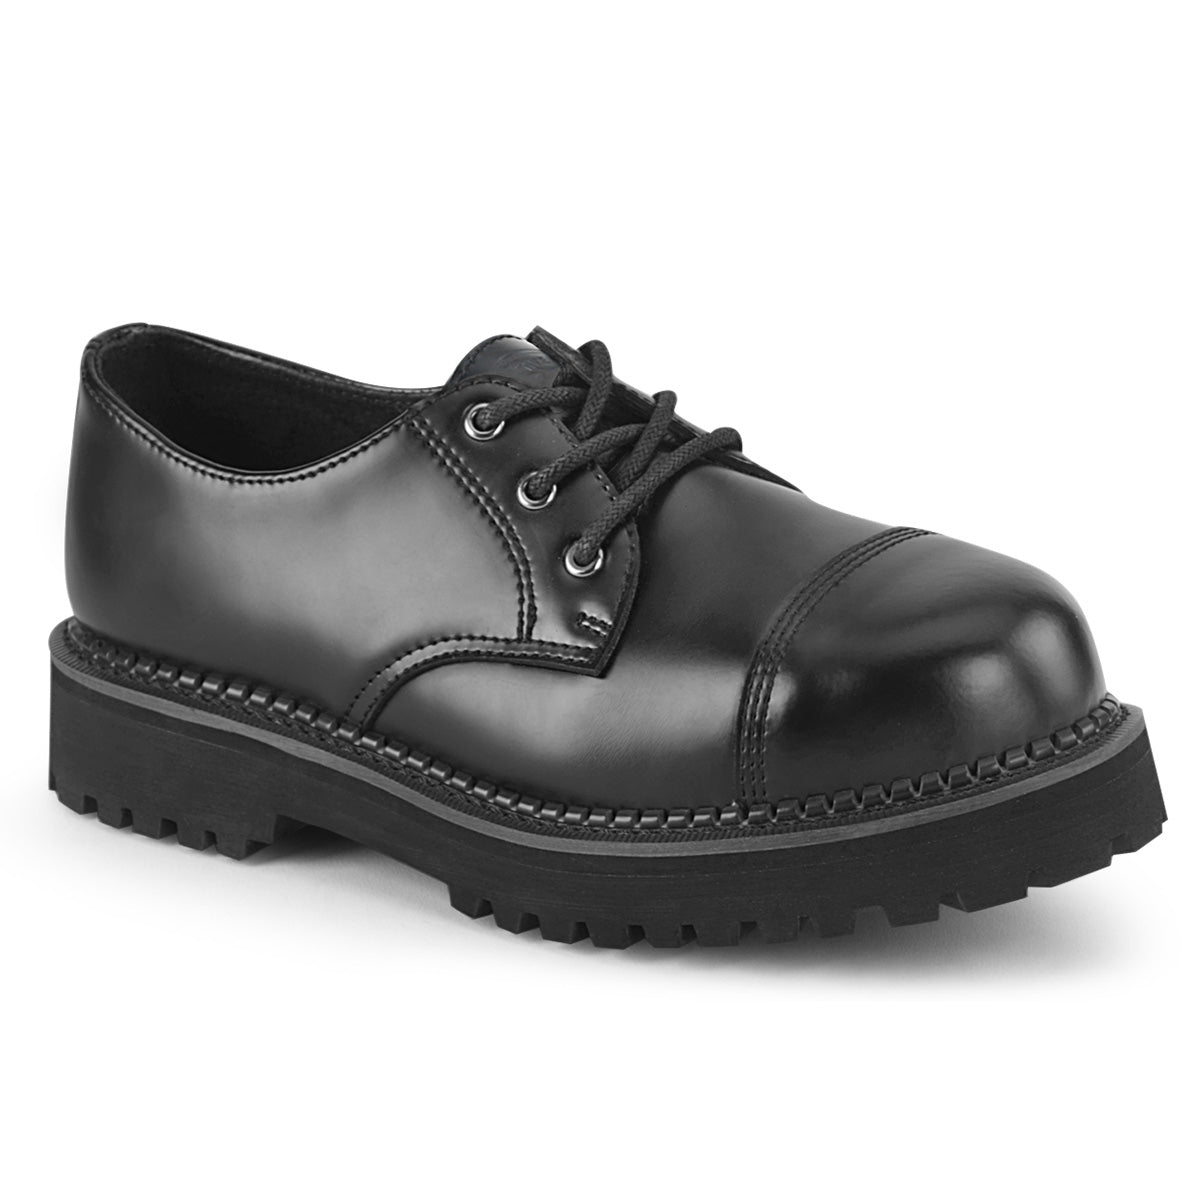 DEMONIA "Riot-03" Shoes - Black Leather